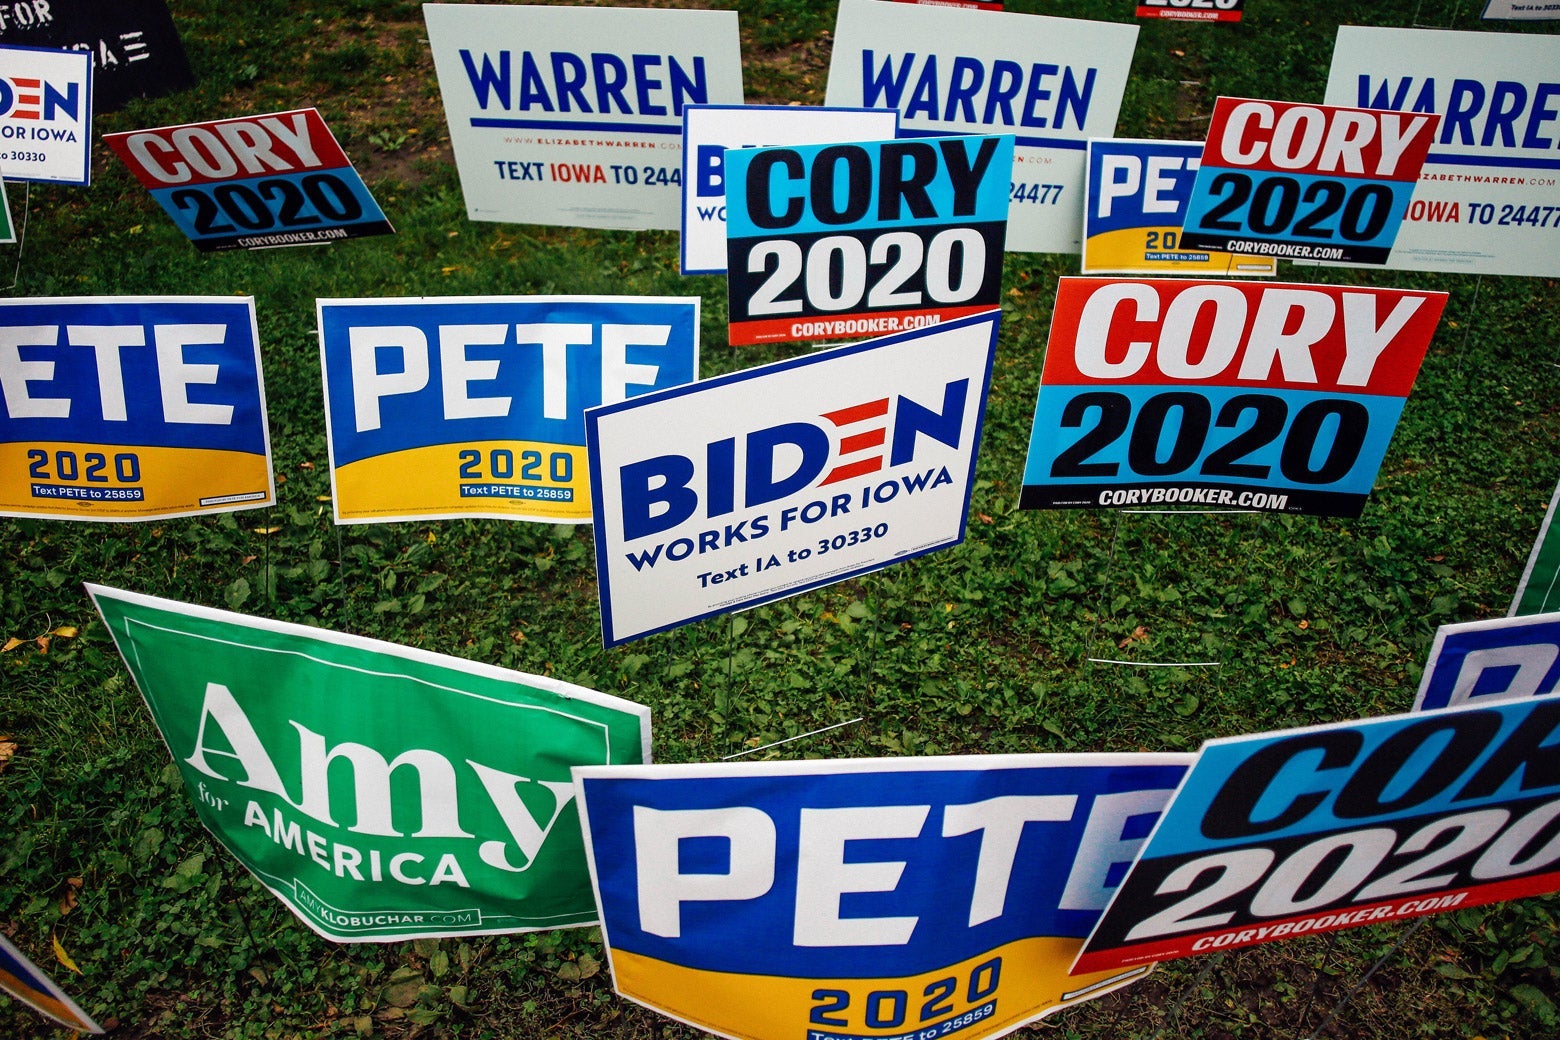 A mass of presidential campaign signs for Amy Klobuchar, Pete Buttigieg, Cory Booker, Joe Biden, and Elizabeth Warren are seen on a field